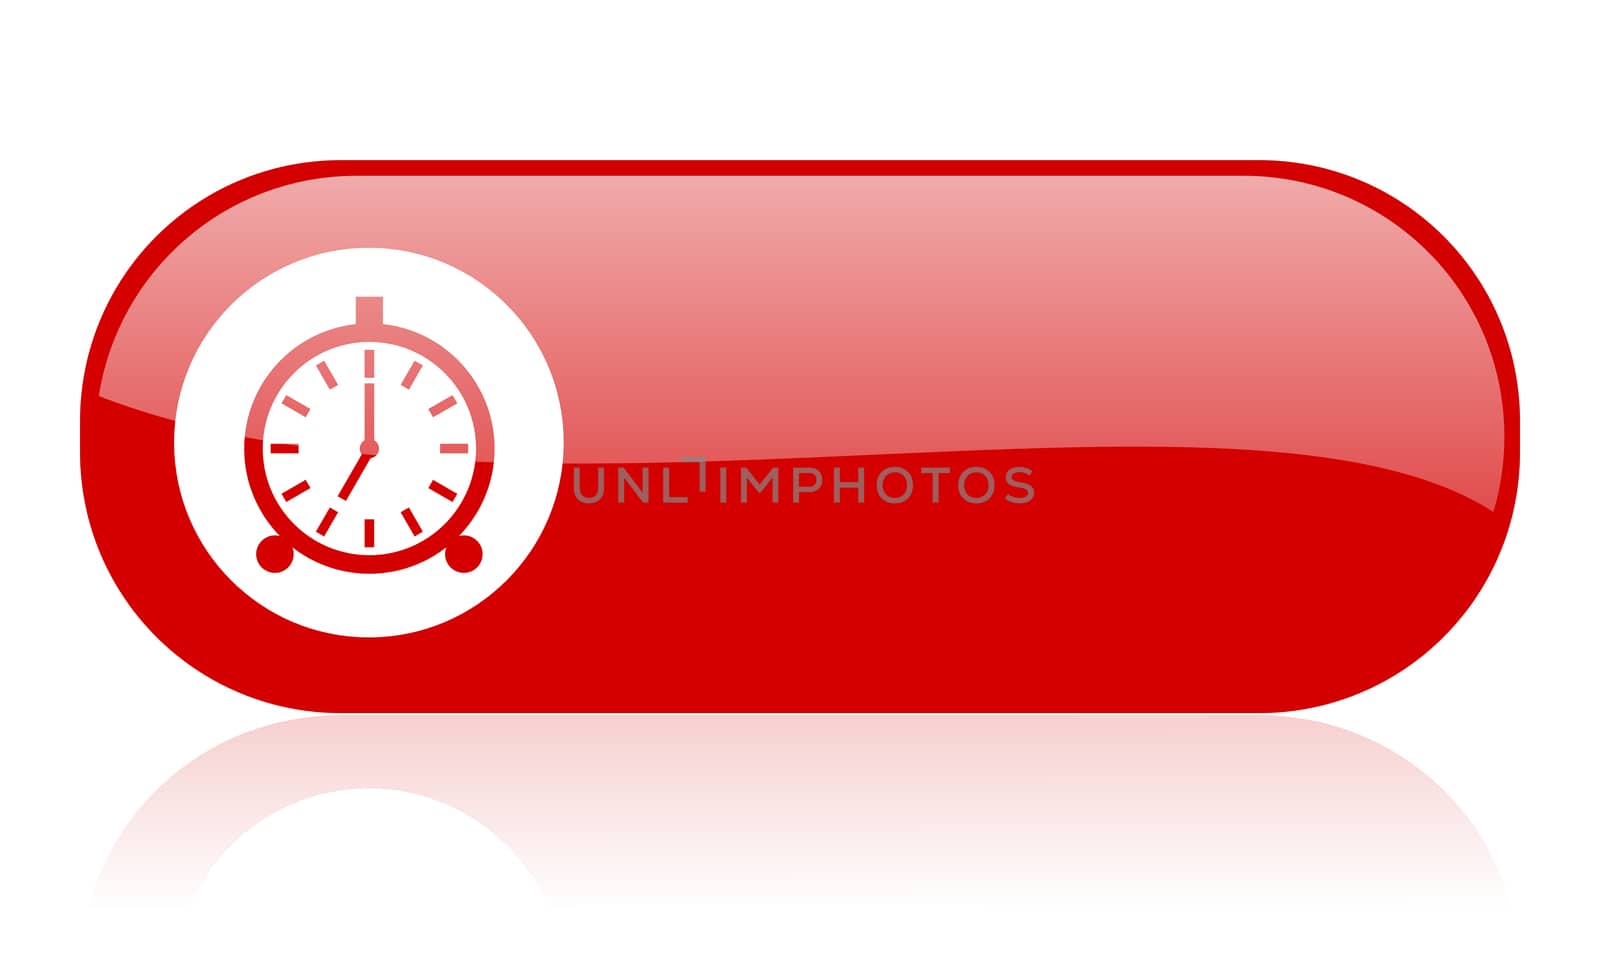 alarm clock red web glossy icon